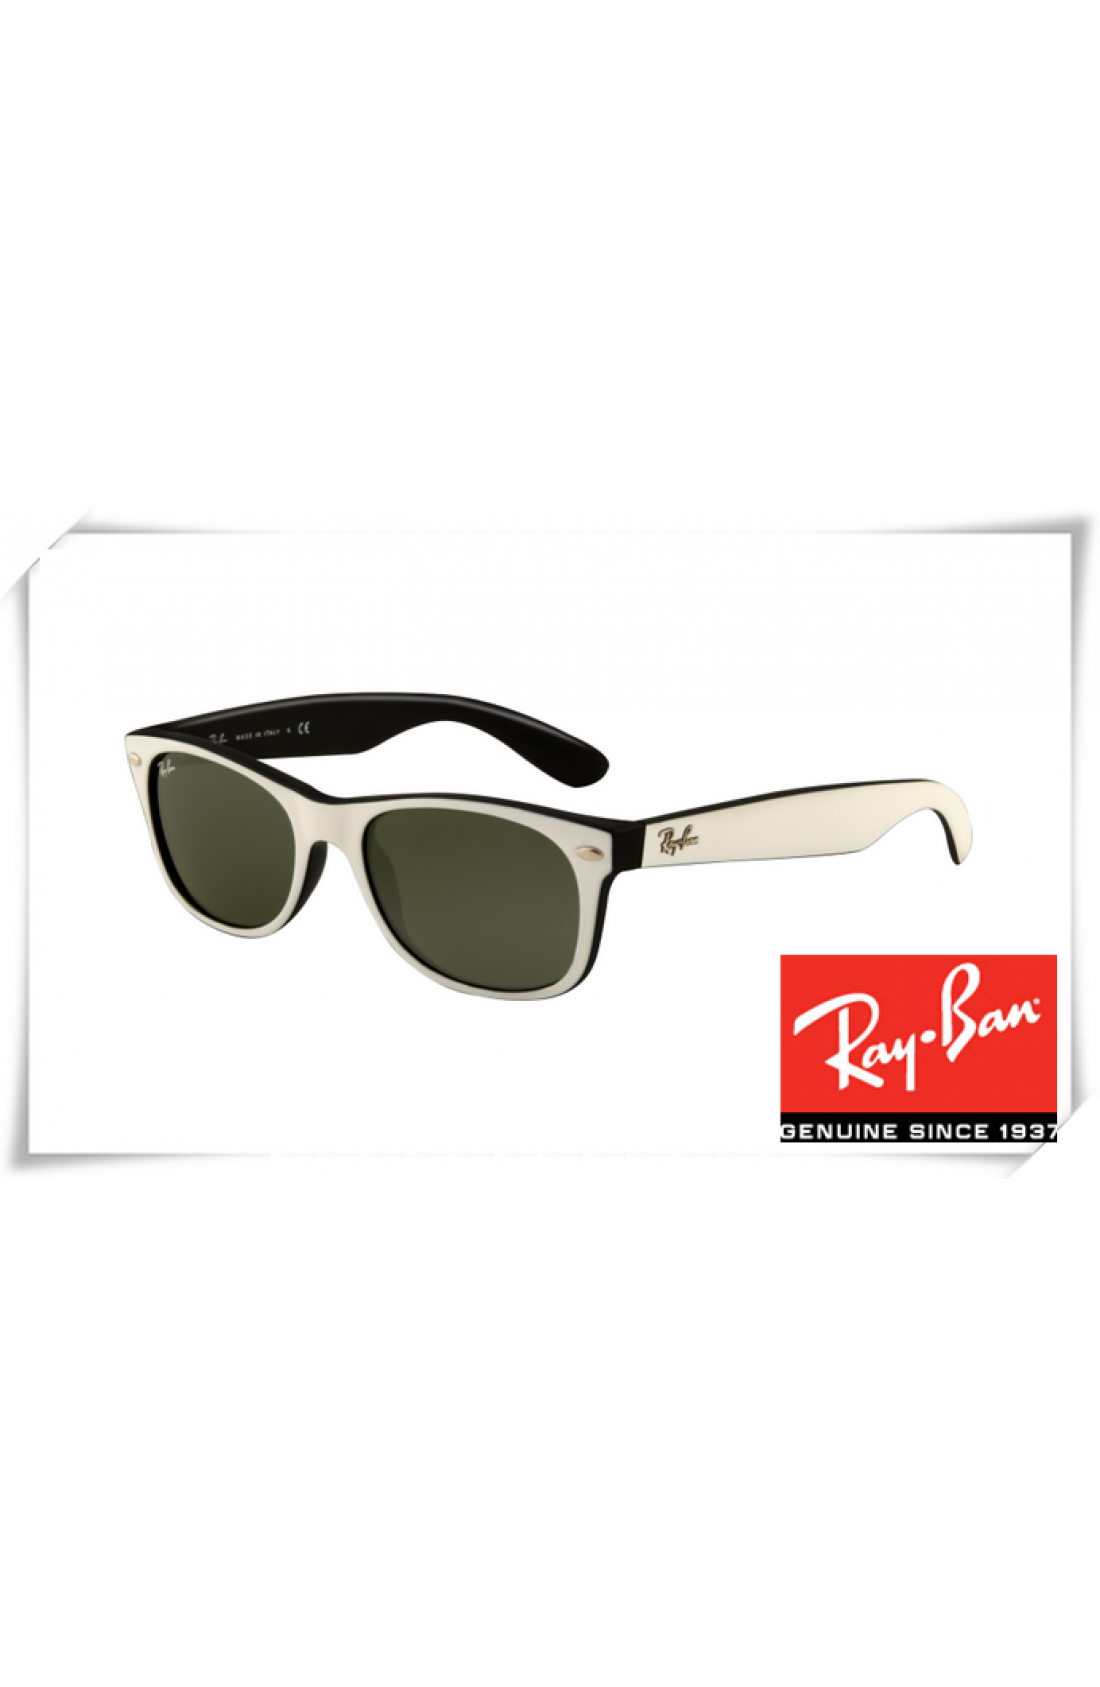 top wayfarer sunglasses brands